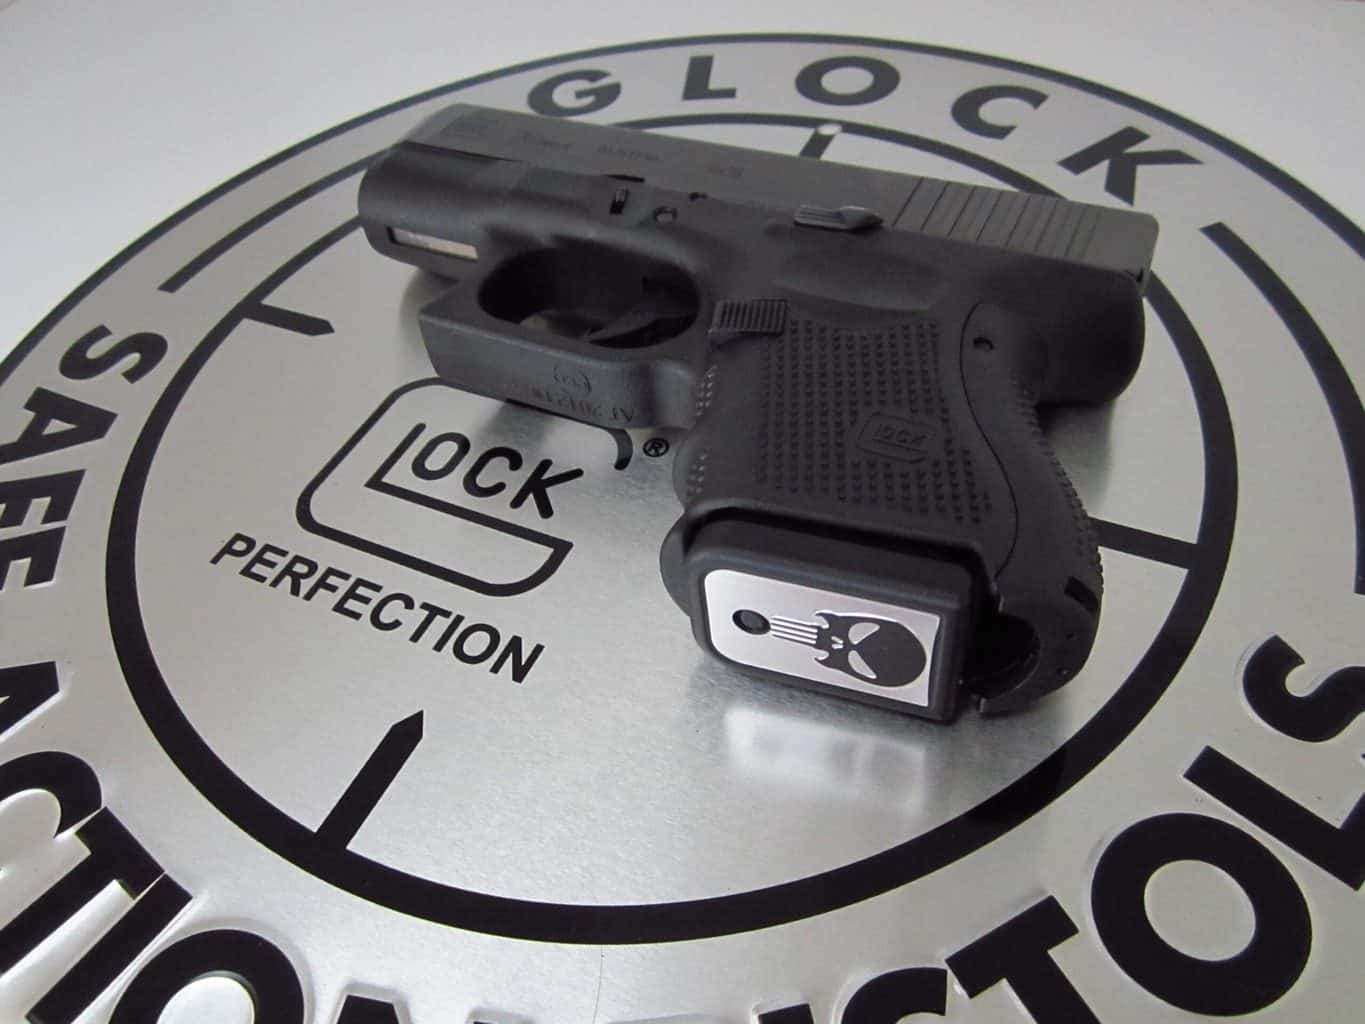 A glock displayed on a glock logo